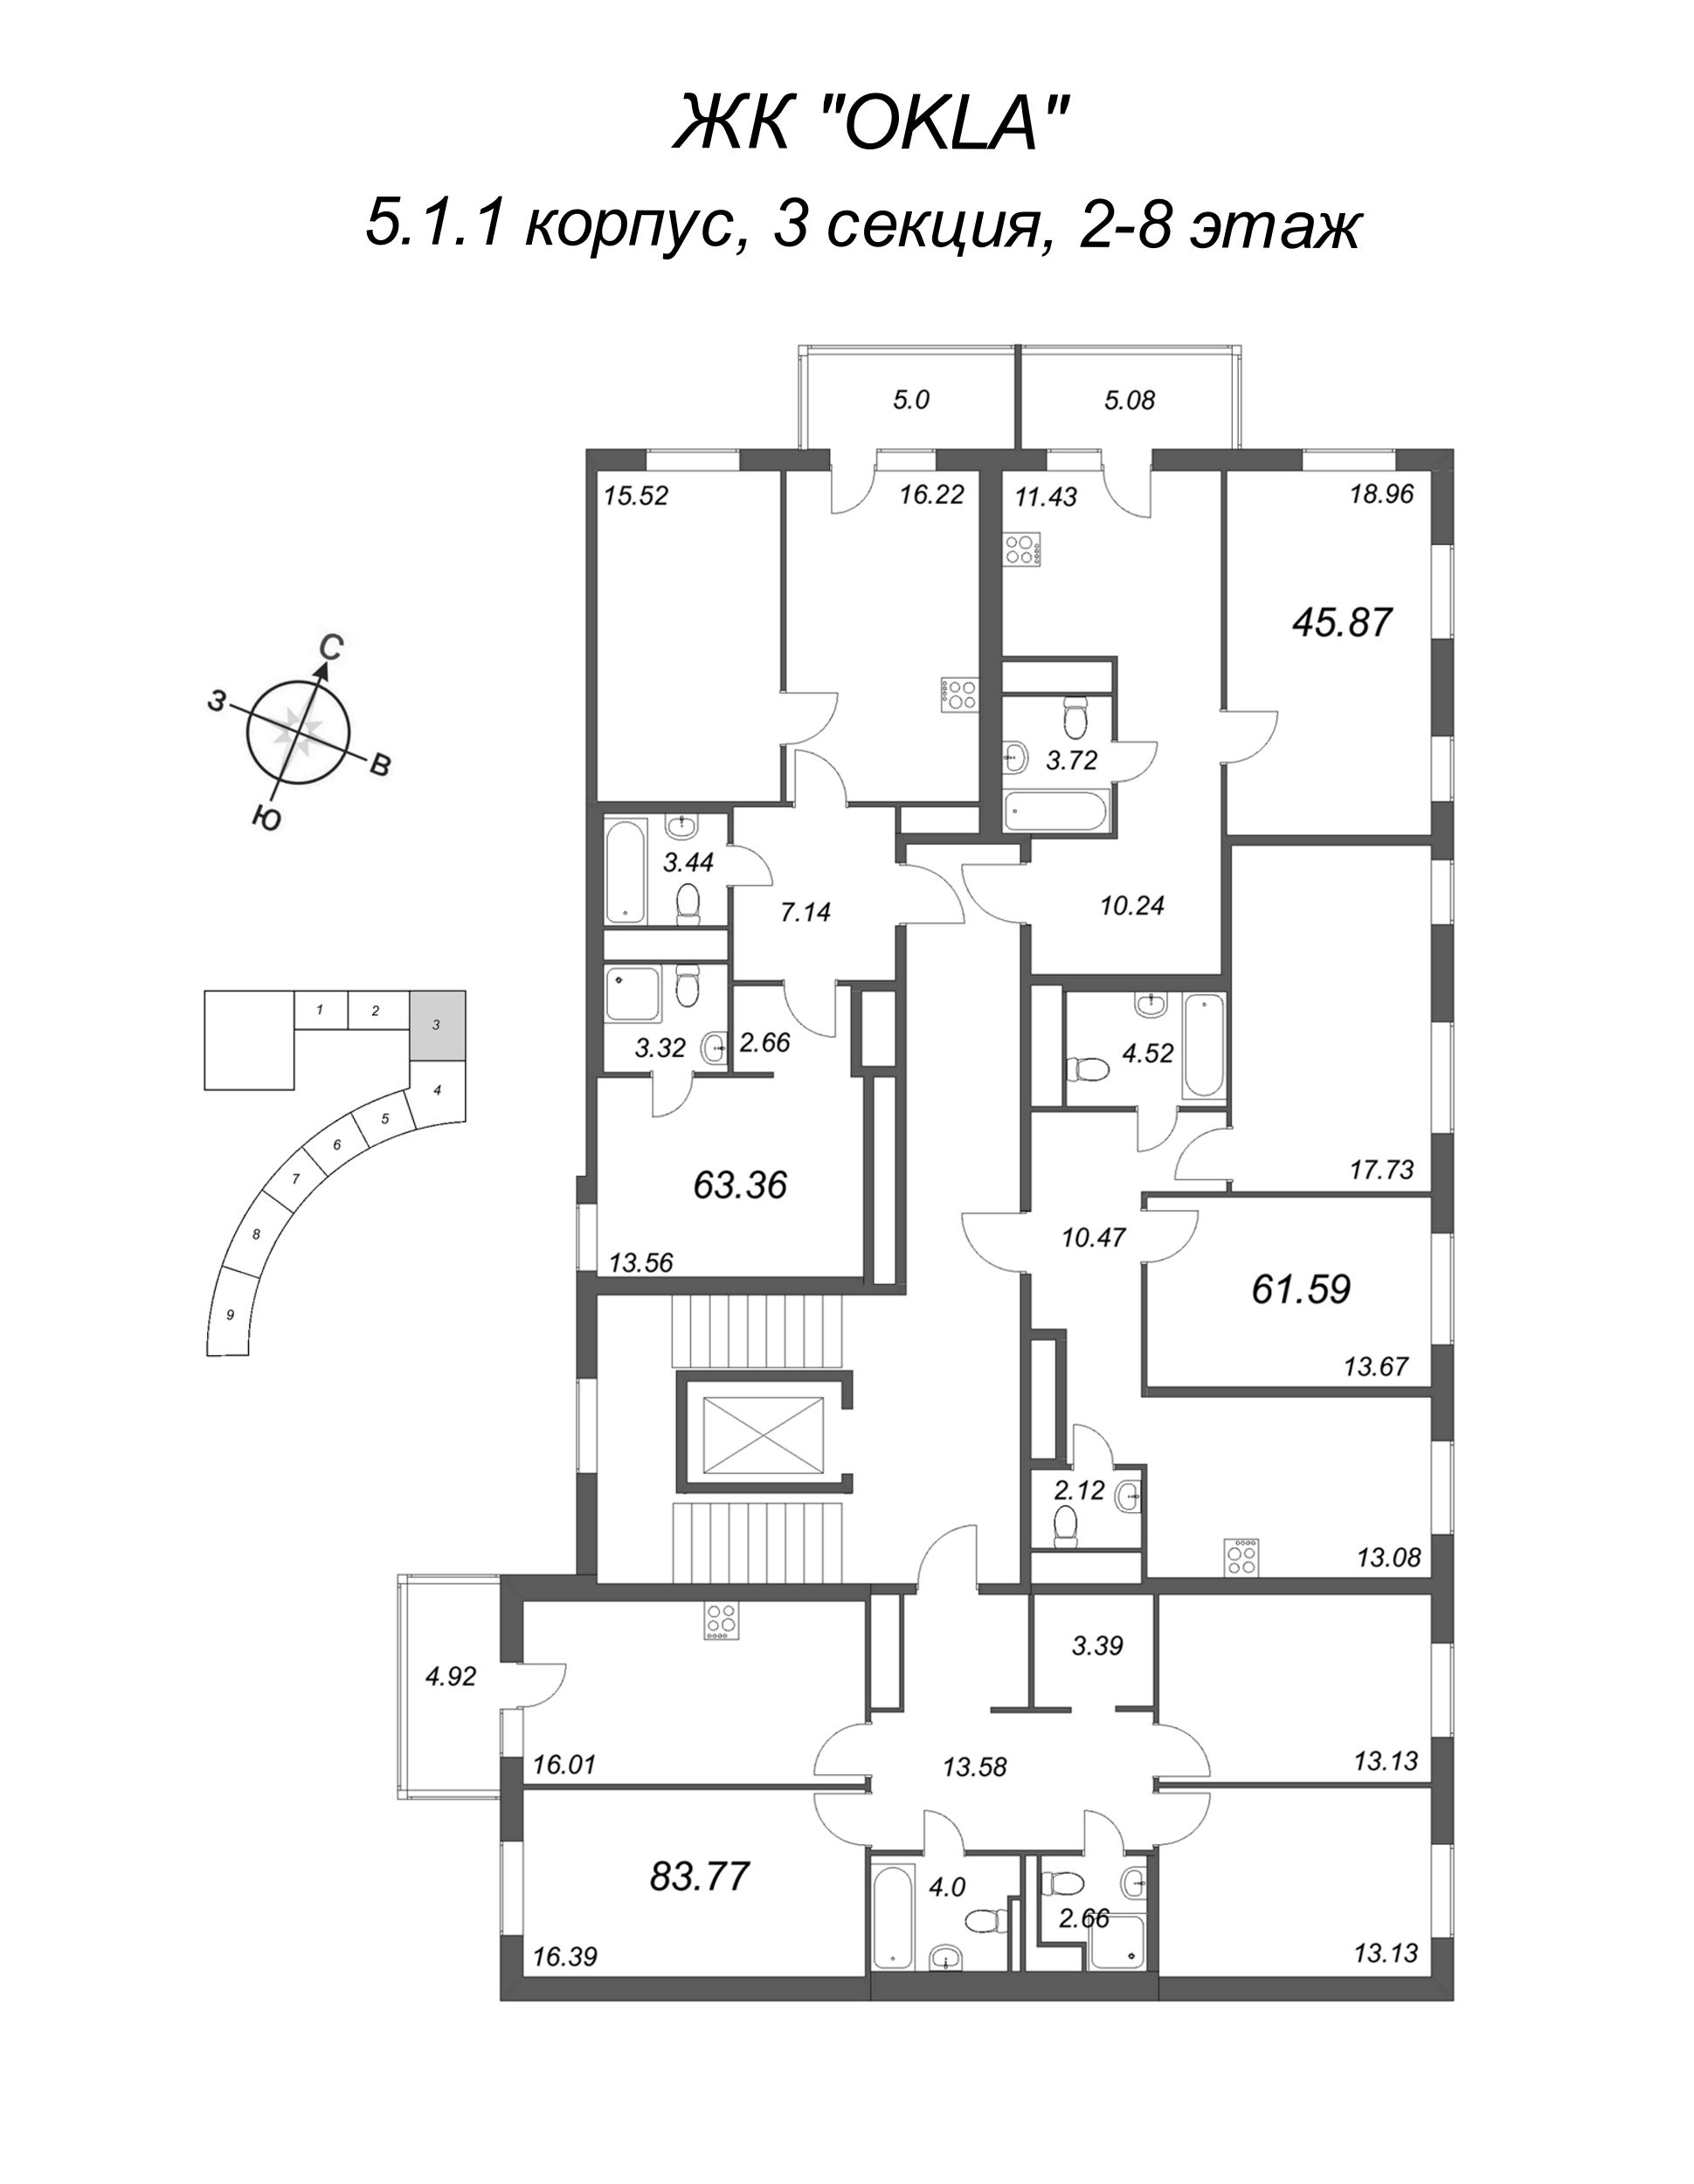 4-комнатная (Евро) квартира, 87.22 м² - планировка этажа